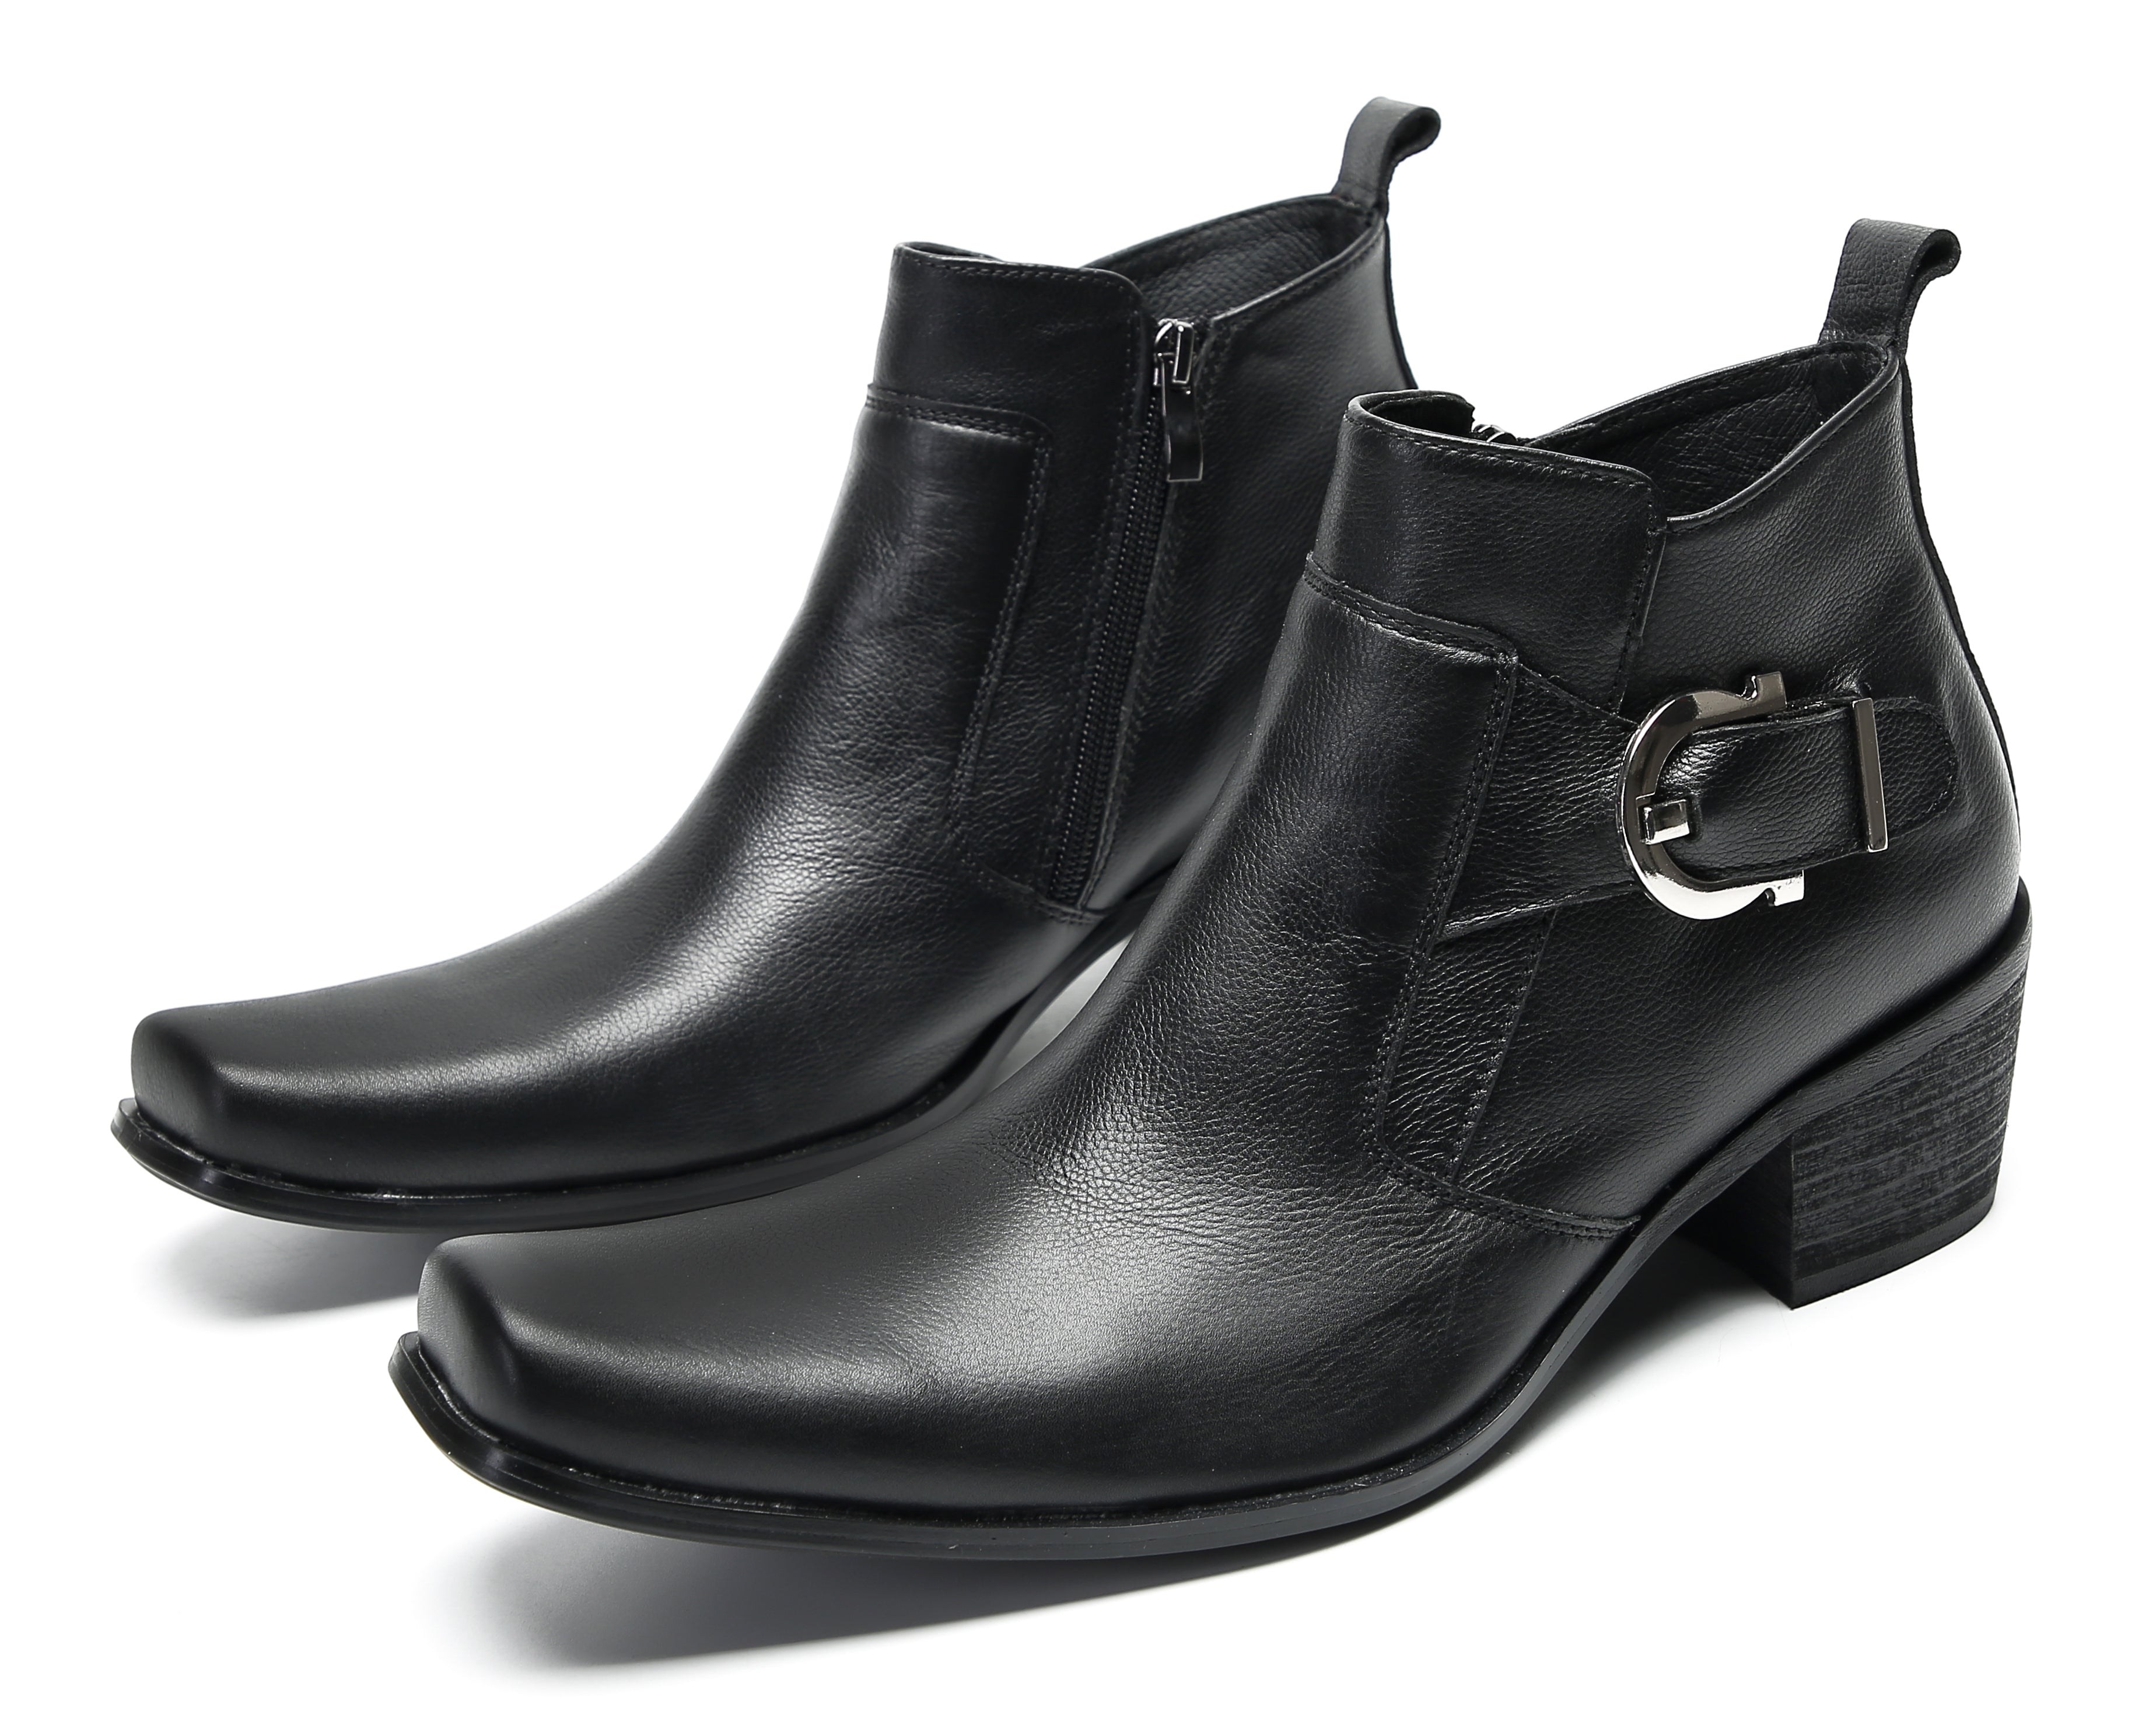 Men's Fashion Casual Plain Toe Buttons Boots